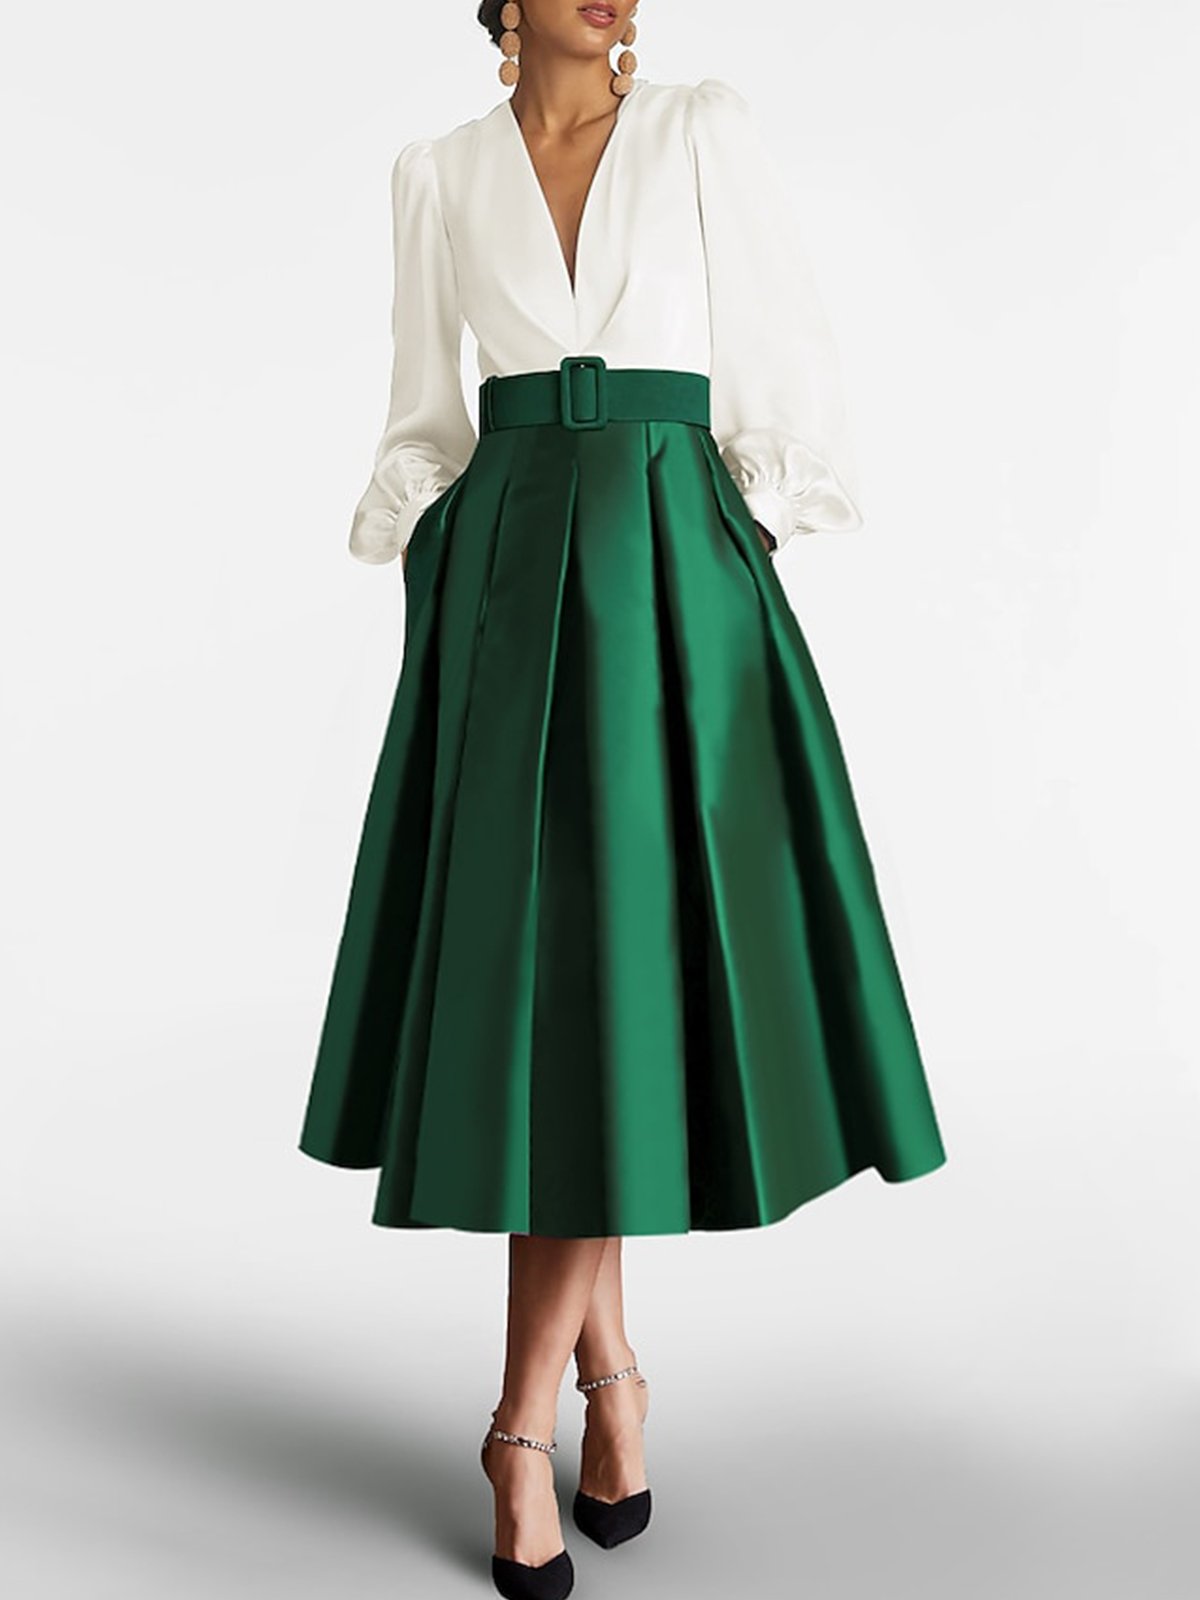 Loose Plain Elegant Skirt With Belt